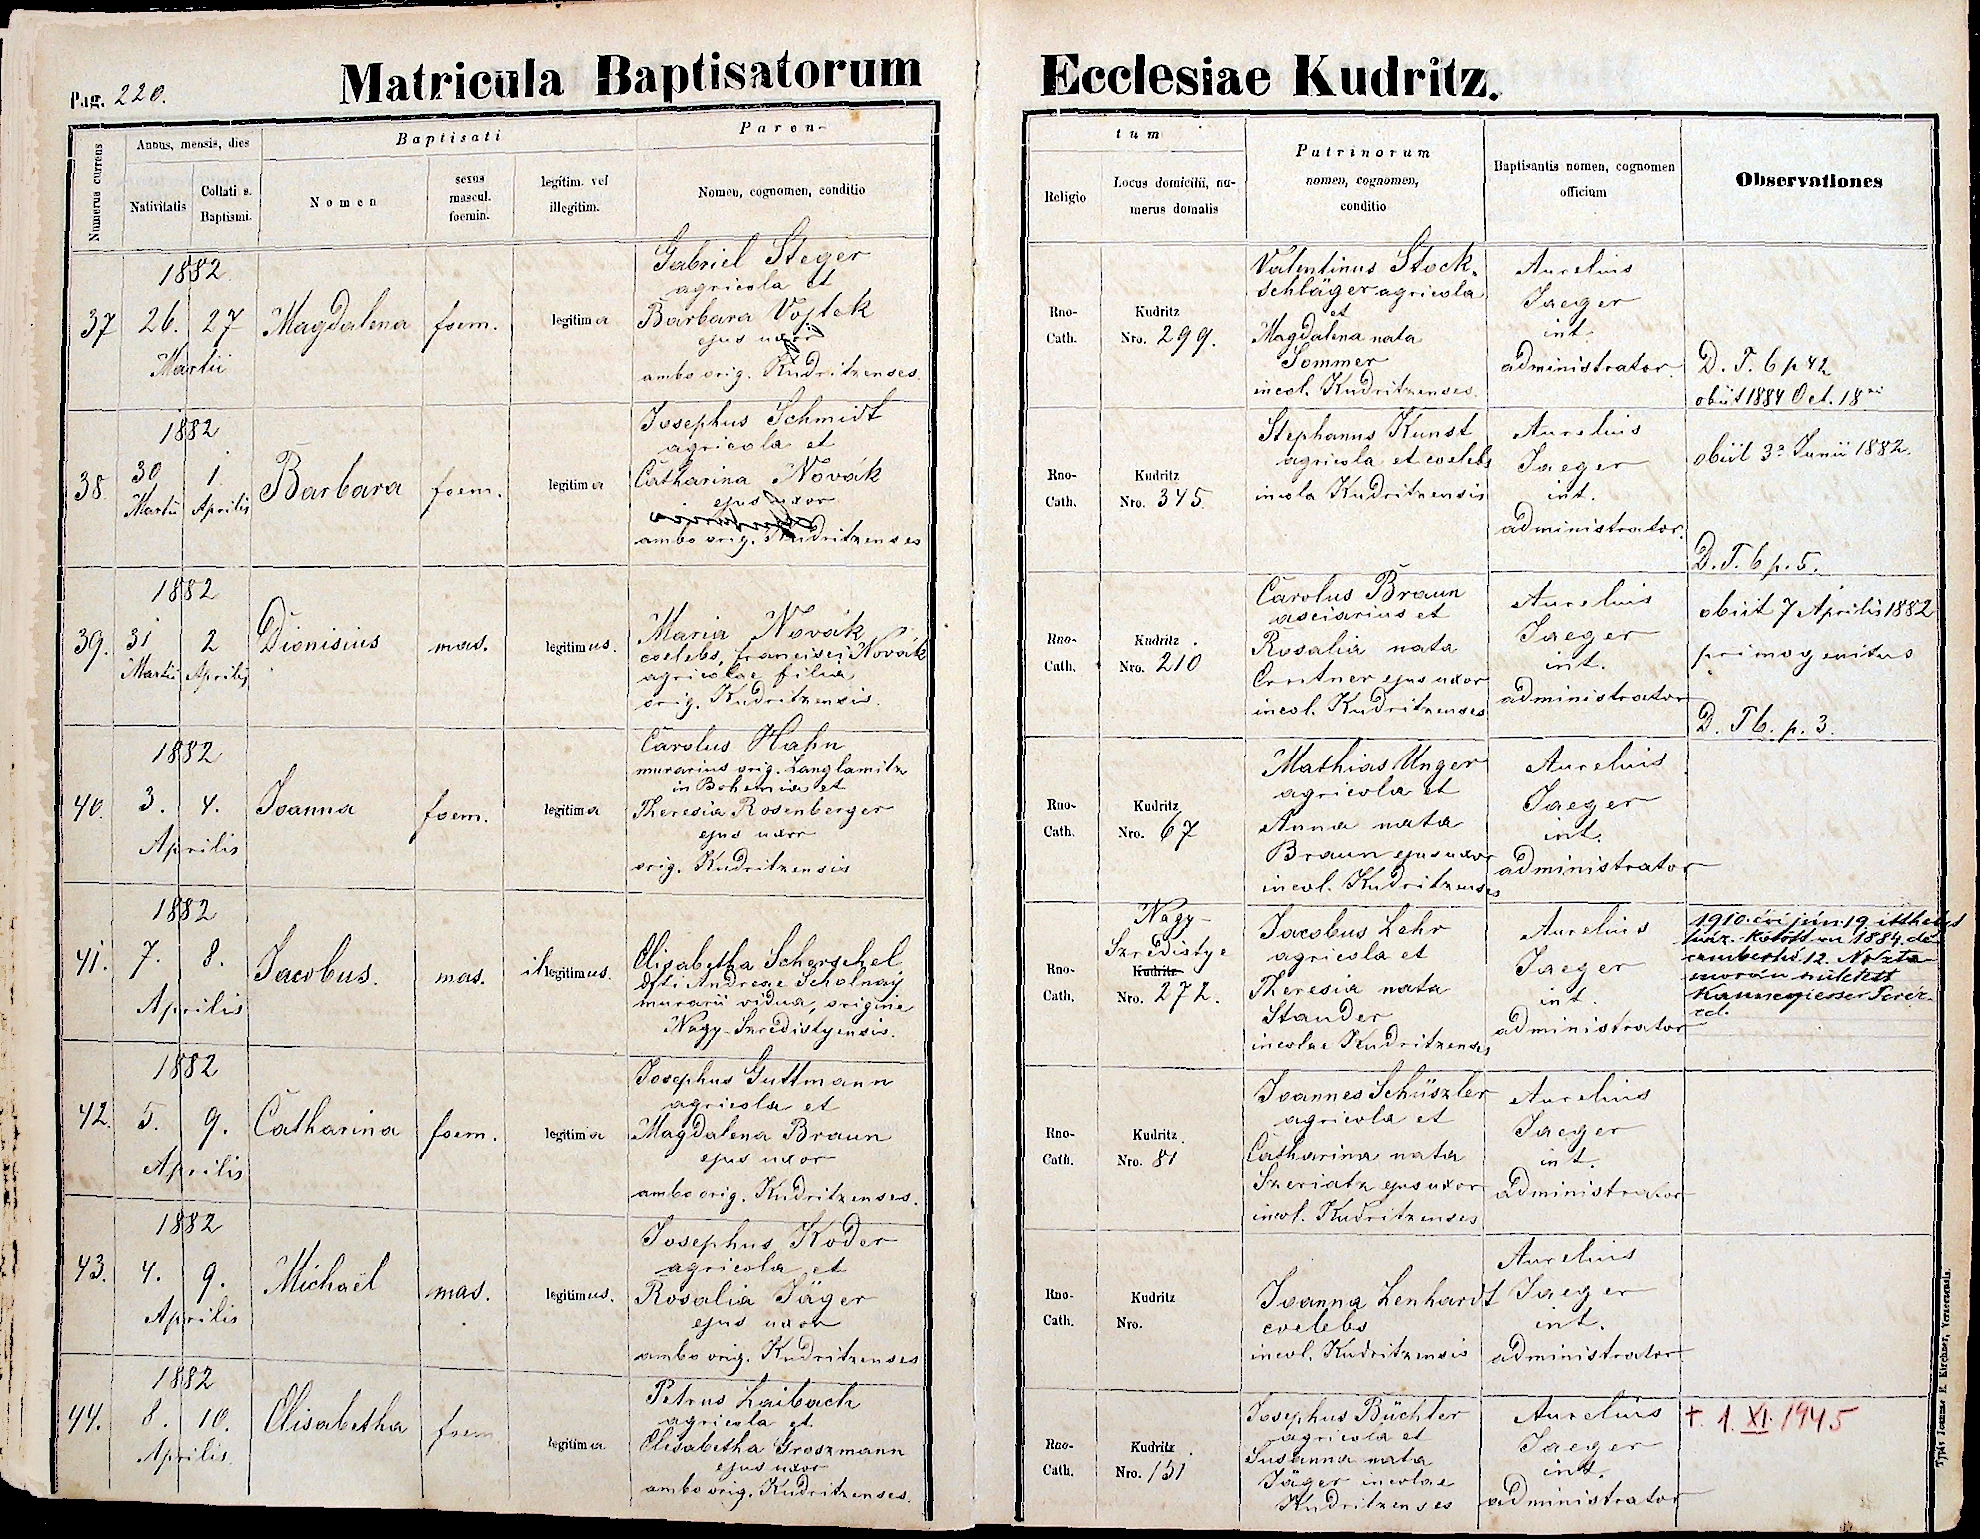 images/church_records/BIRTHS/1884-1899B/1899/220